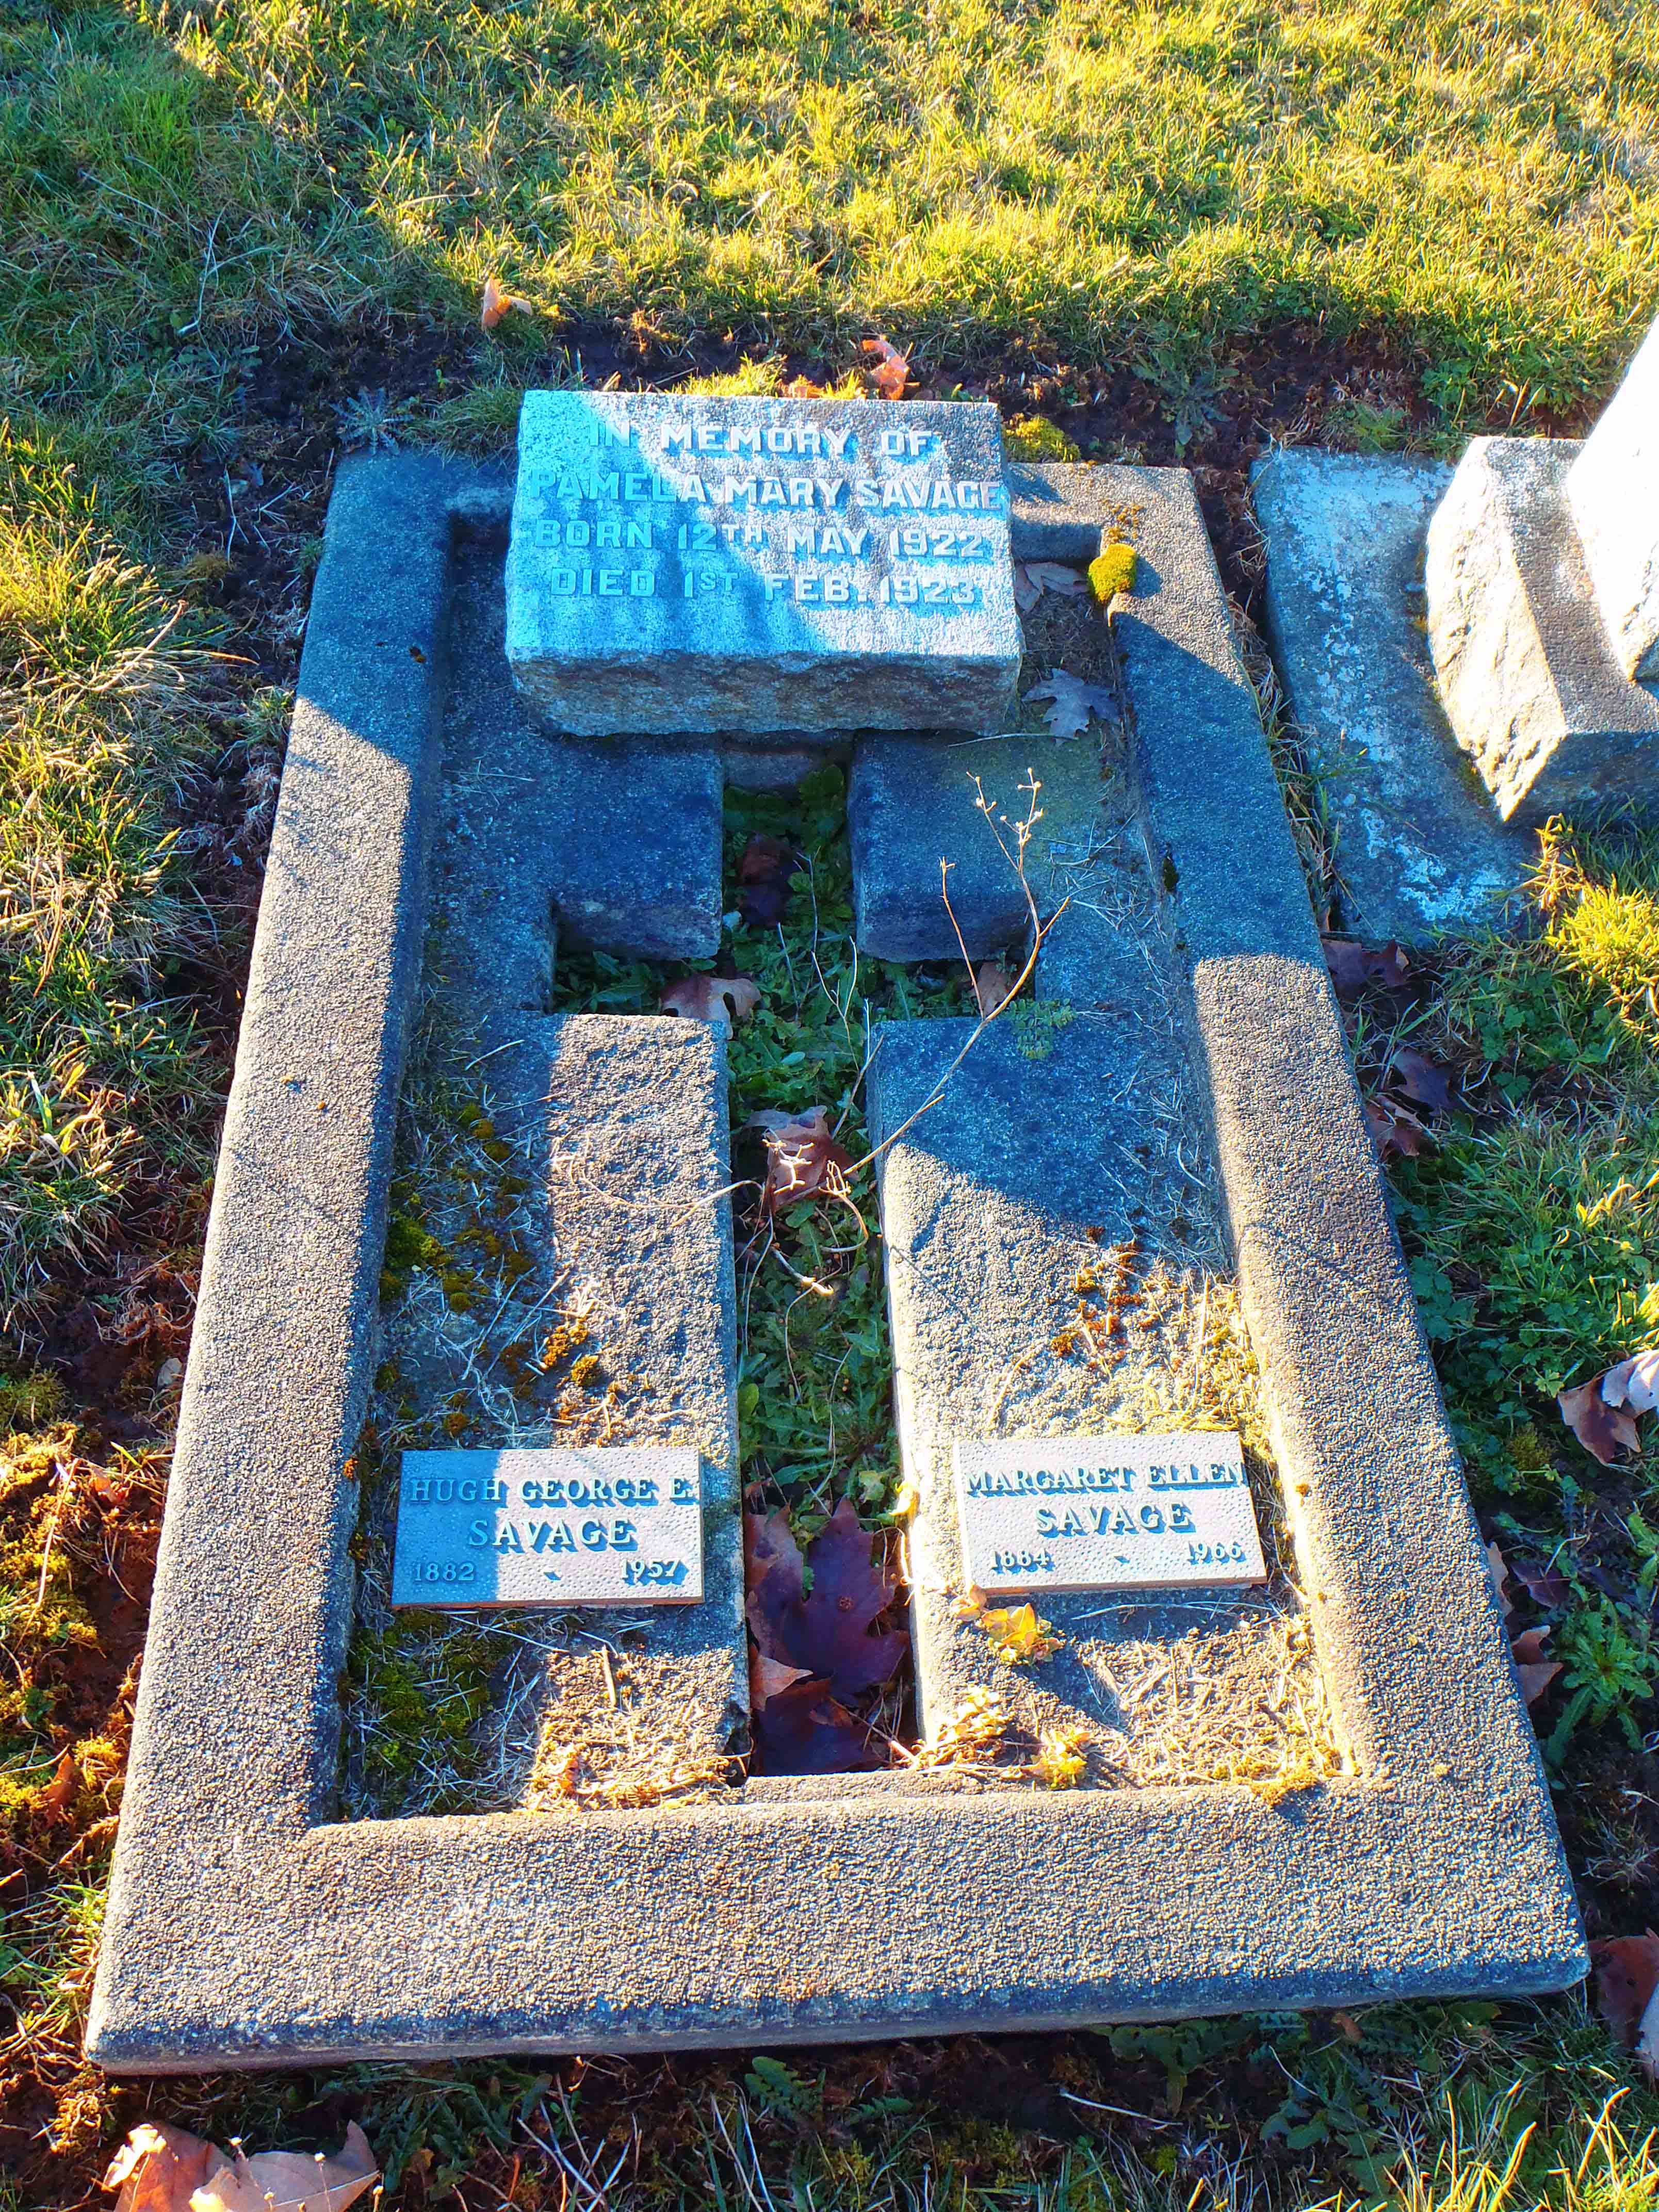 Hugh George savage family grave, Saint Mary's Somenos Anglican cemetery